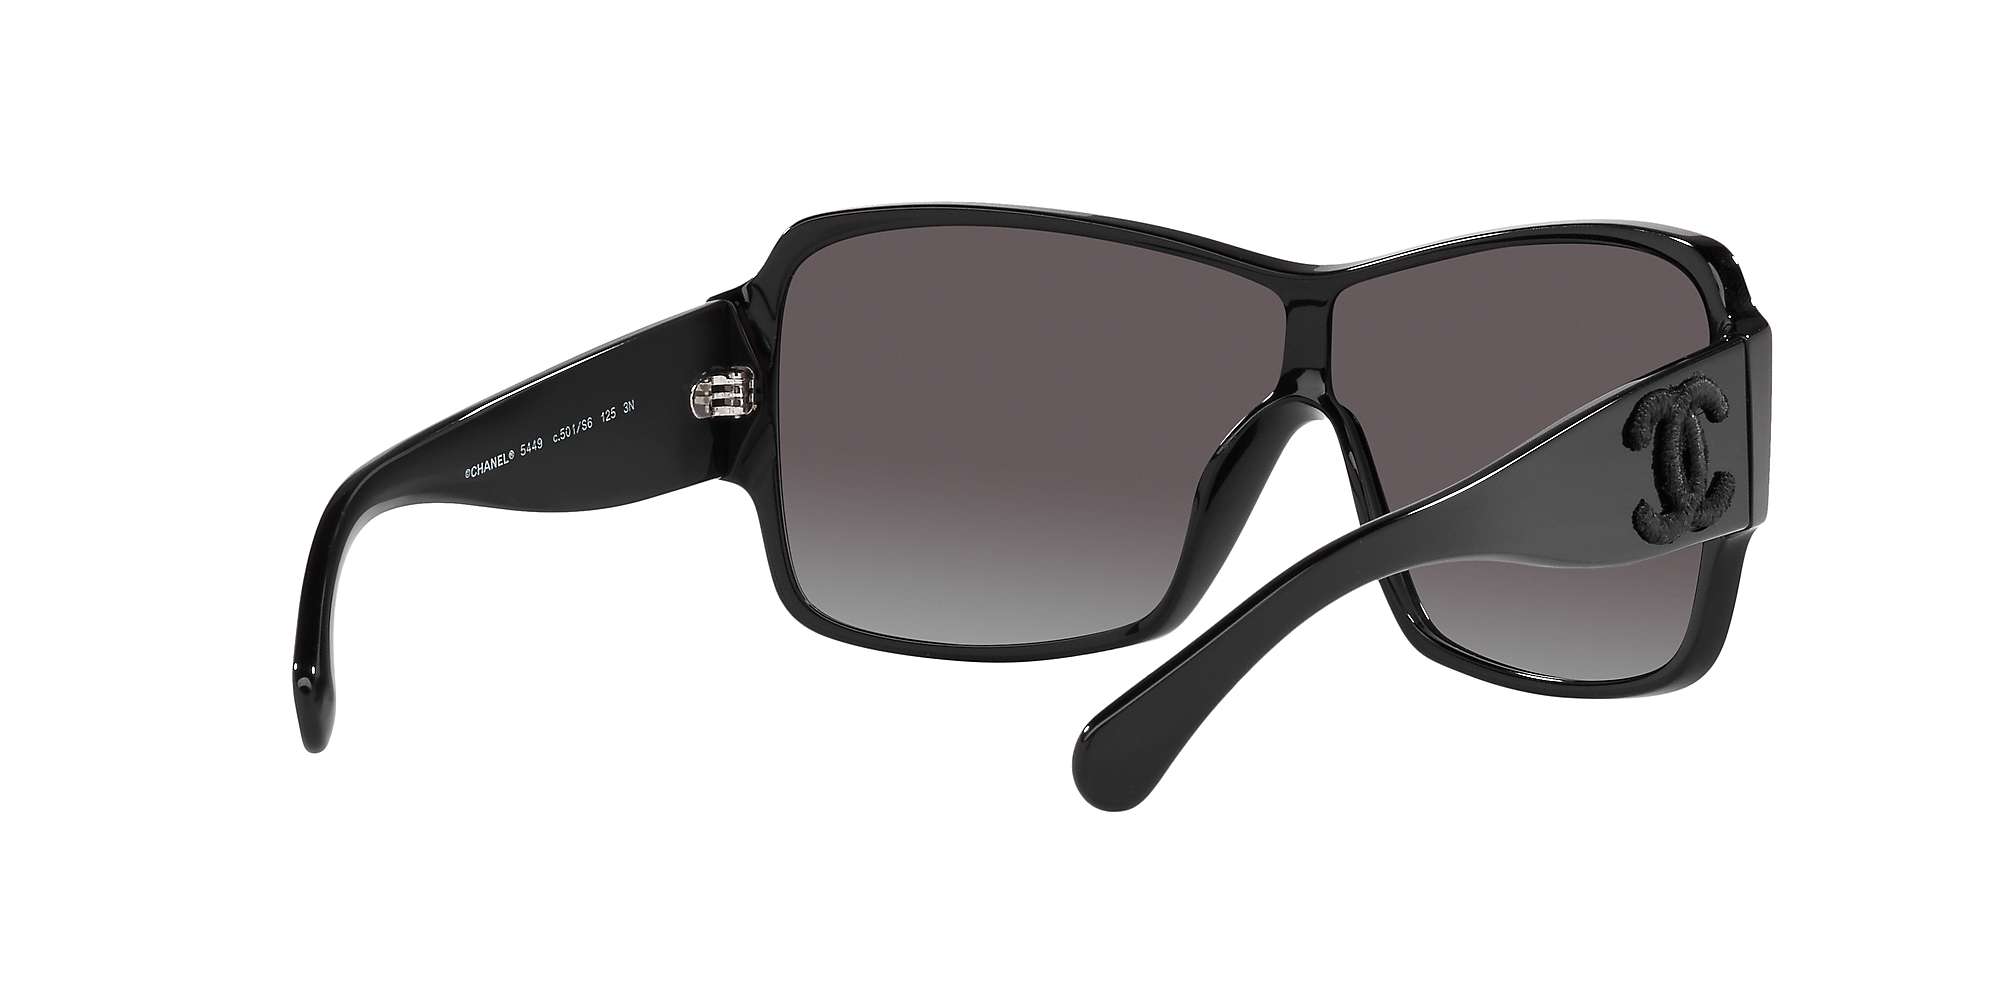 CHANEL CH5449 Women's Rectangular Sunglasses, Black at John Lewis & Partners